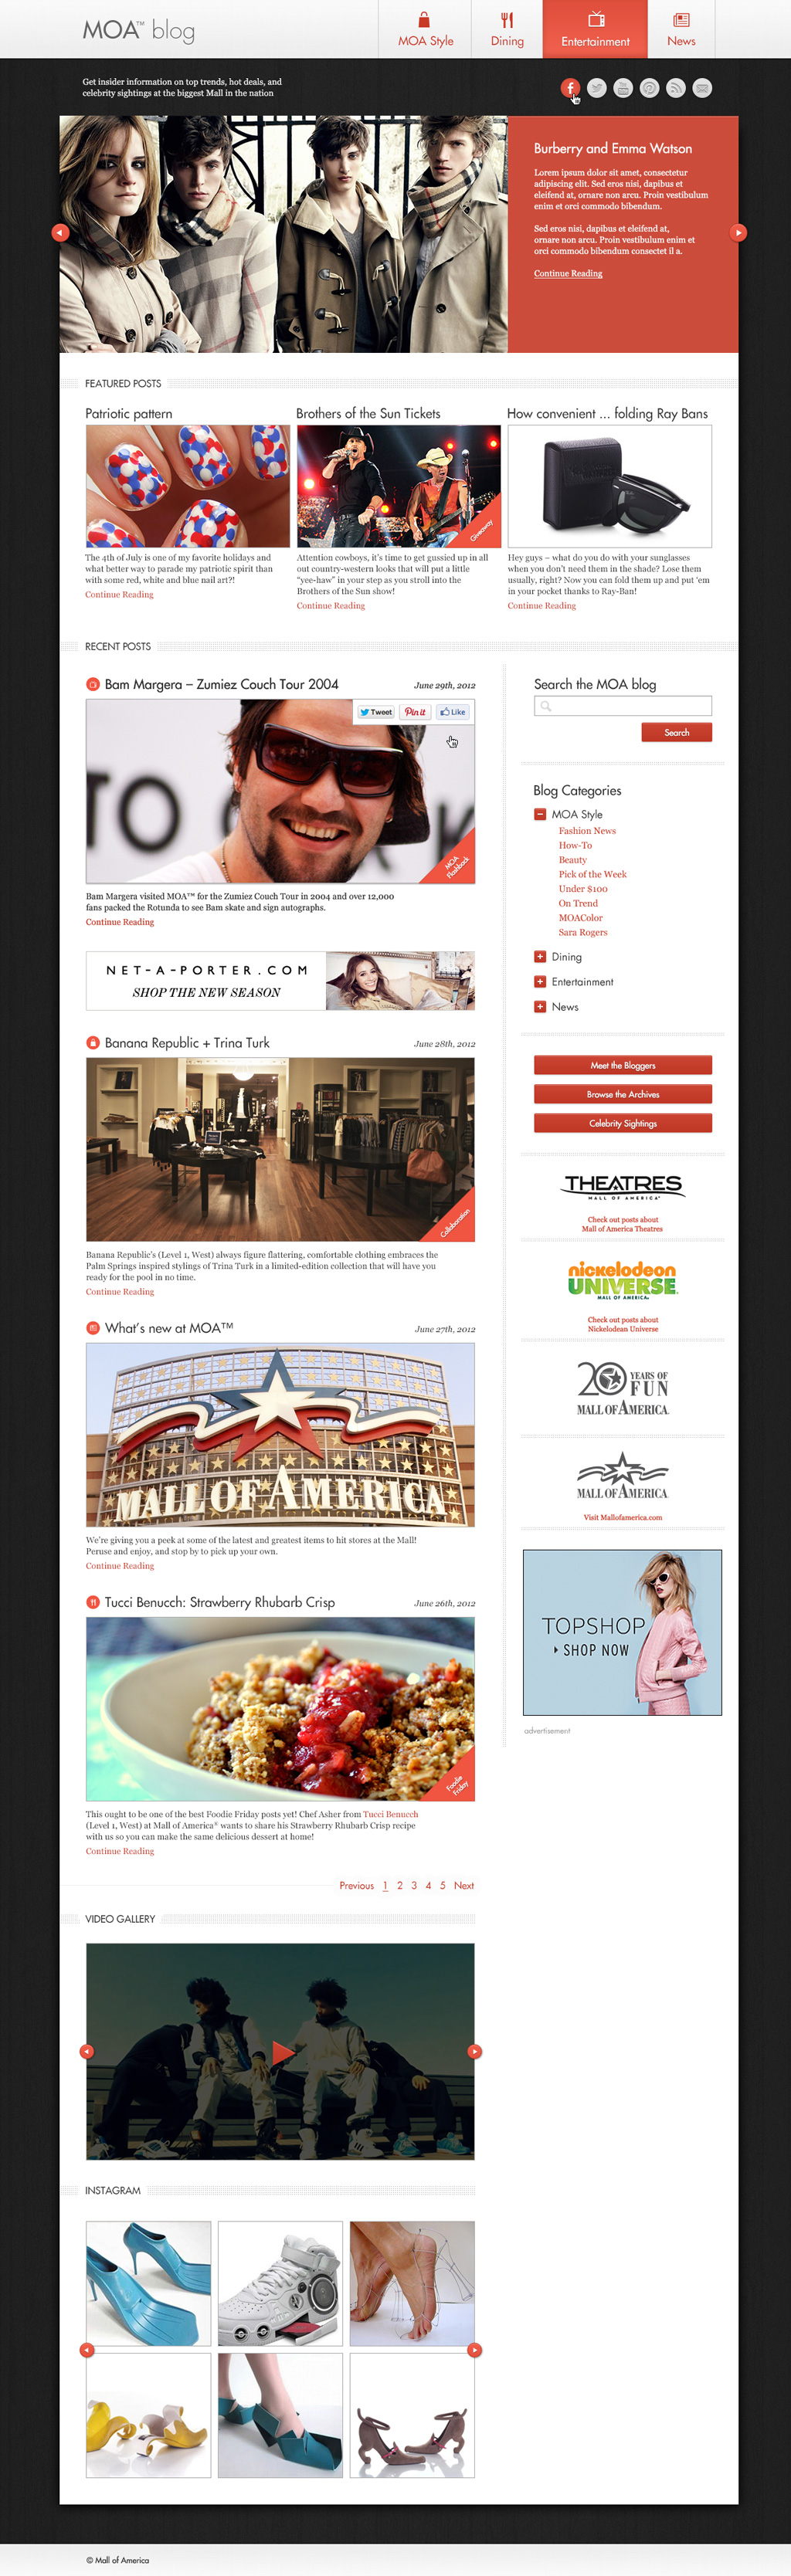 Mall of America Blog portfolio image